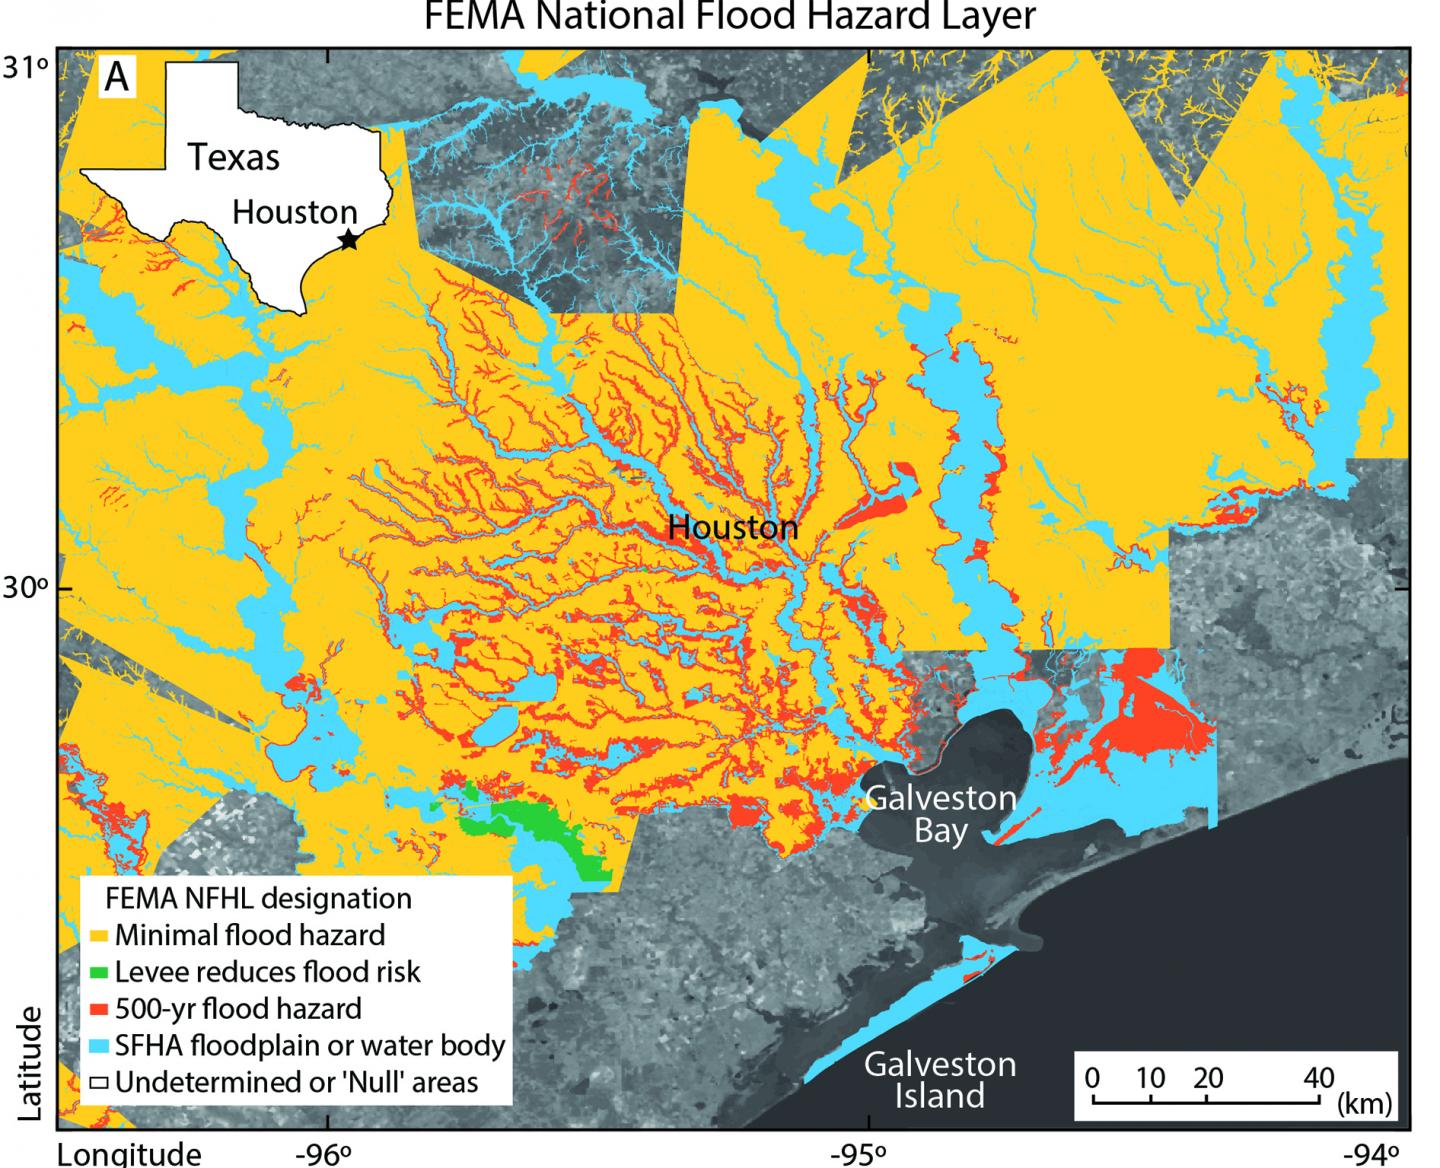 Flood Risk Classifications [IMAGE] EurekAlert! Science News Releases